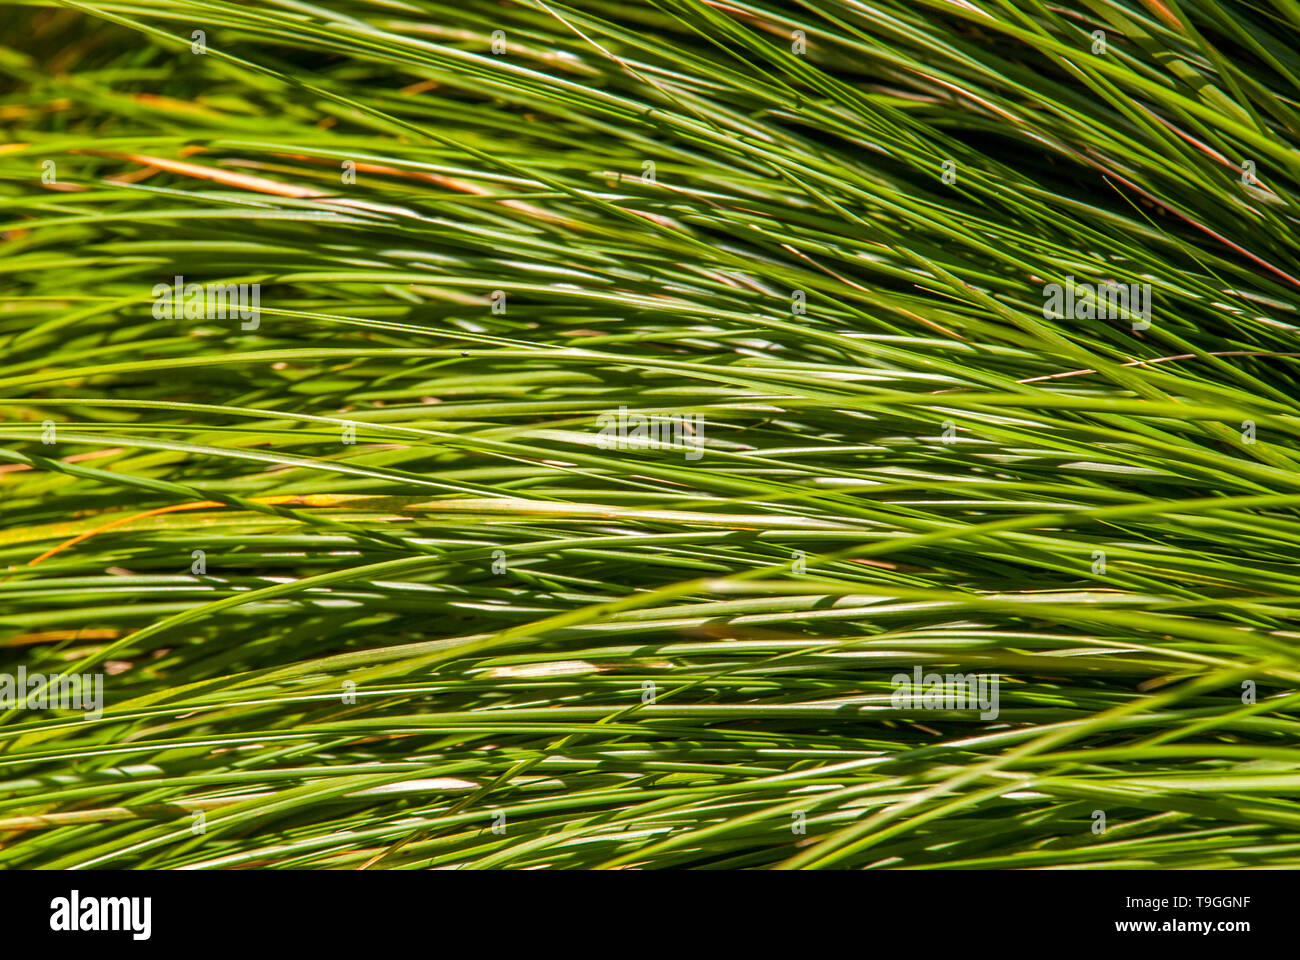 tef cereal - eragrostis tef - botany and botanical backgrounds Suitable for making background images. Stock Photo